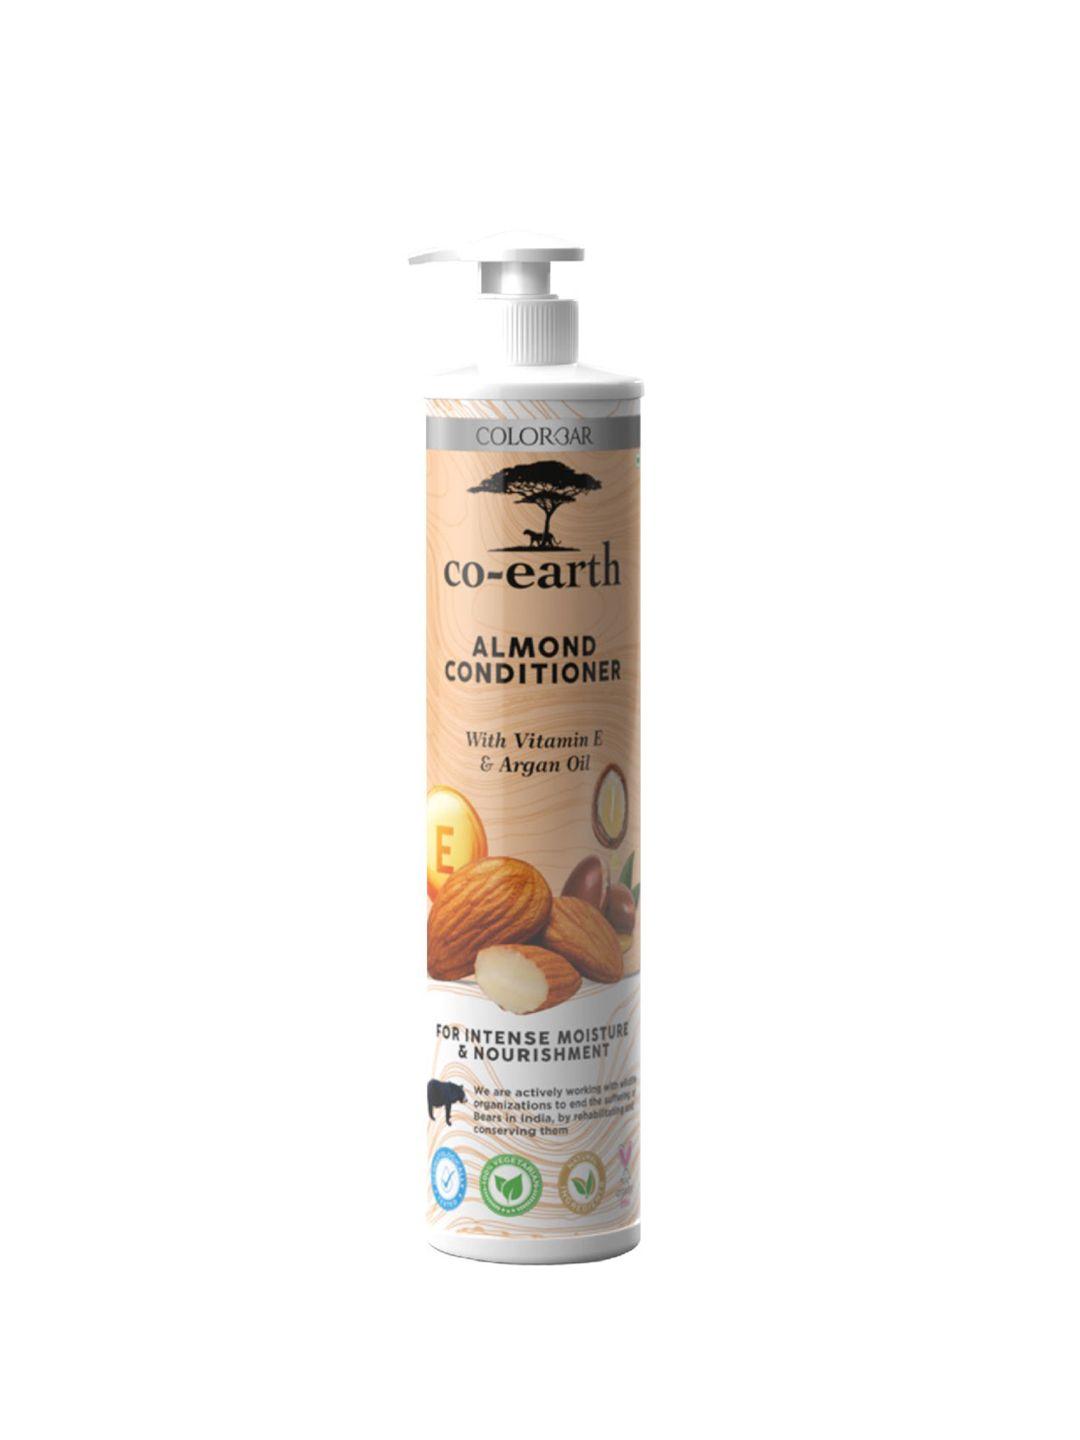 colorbar co-earth almond hair conditioner with vitamin e & argan oil - 300 ml